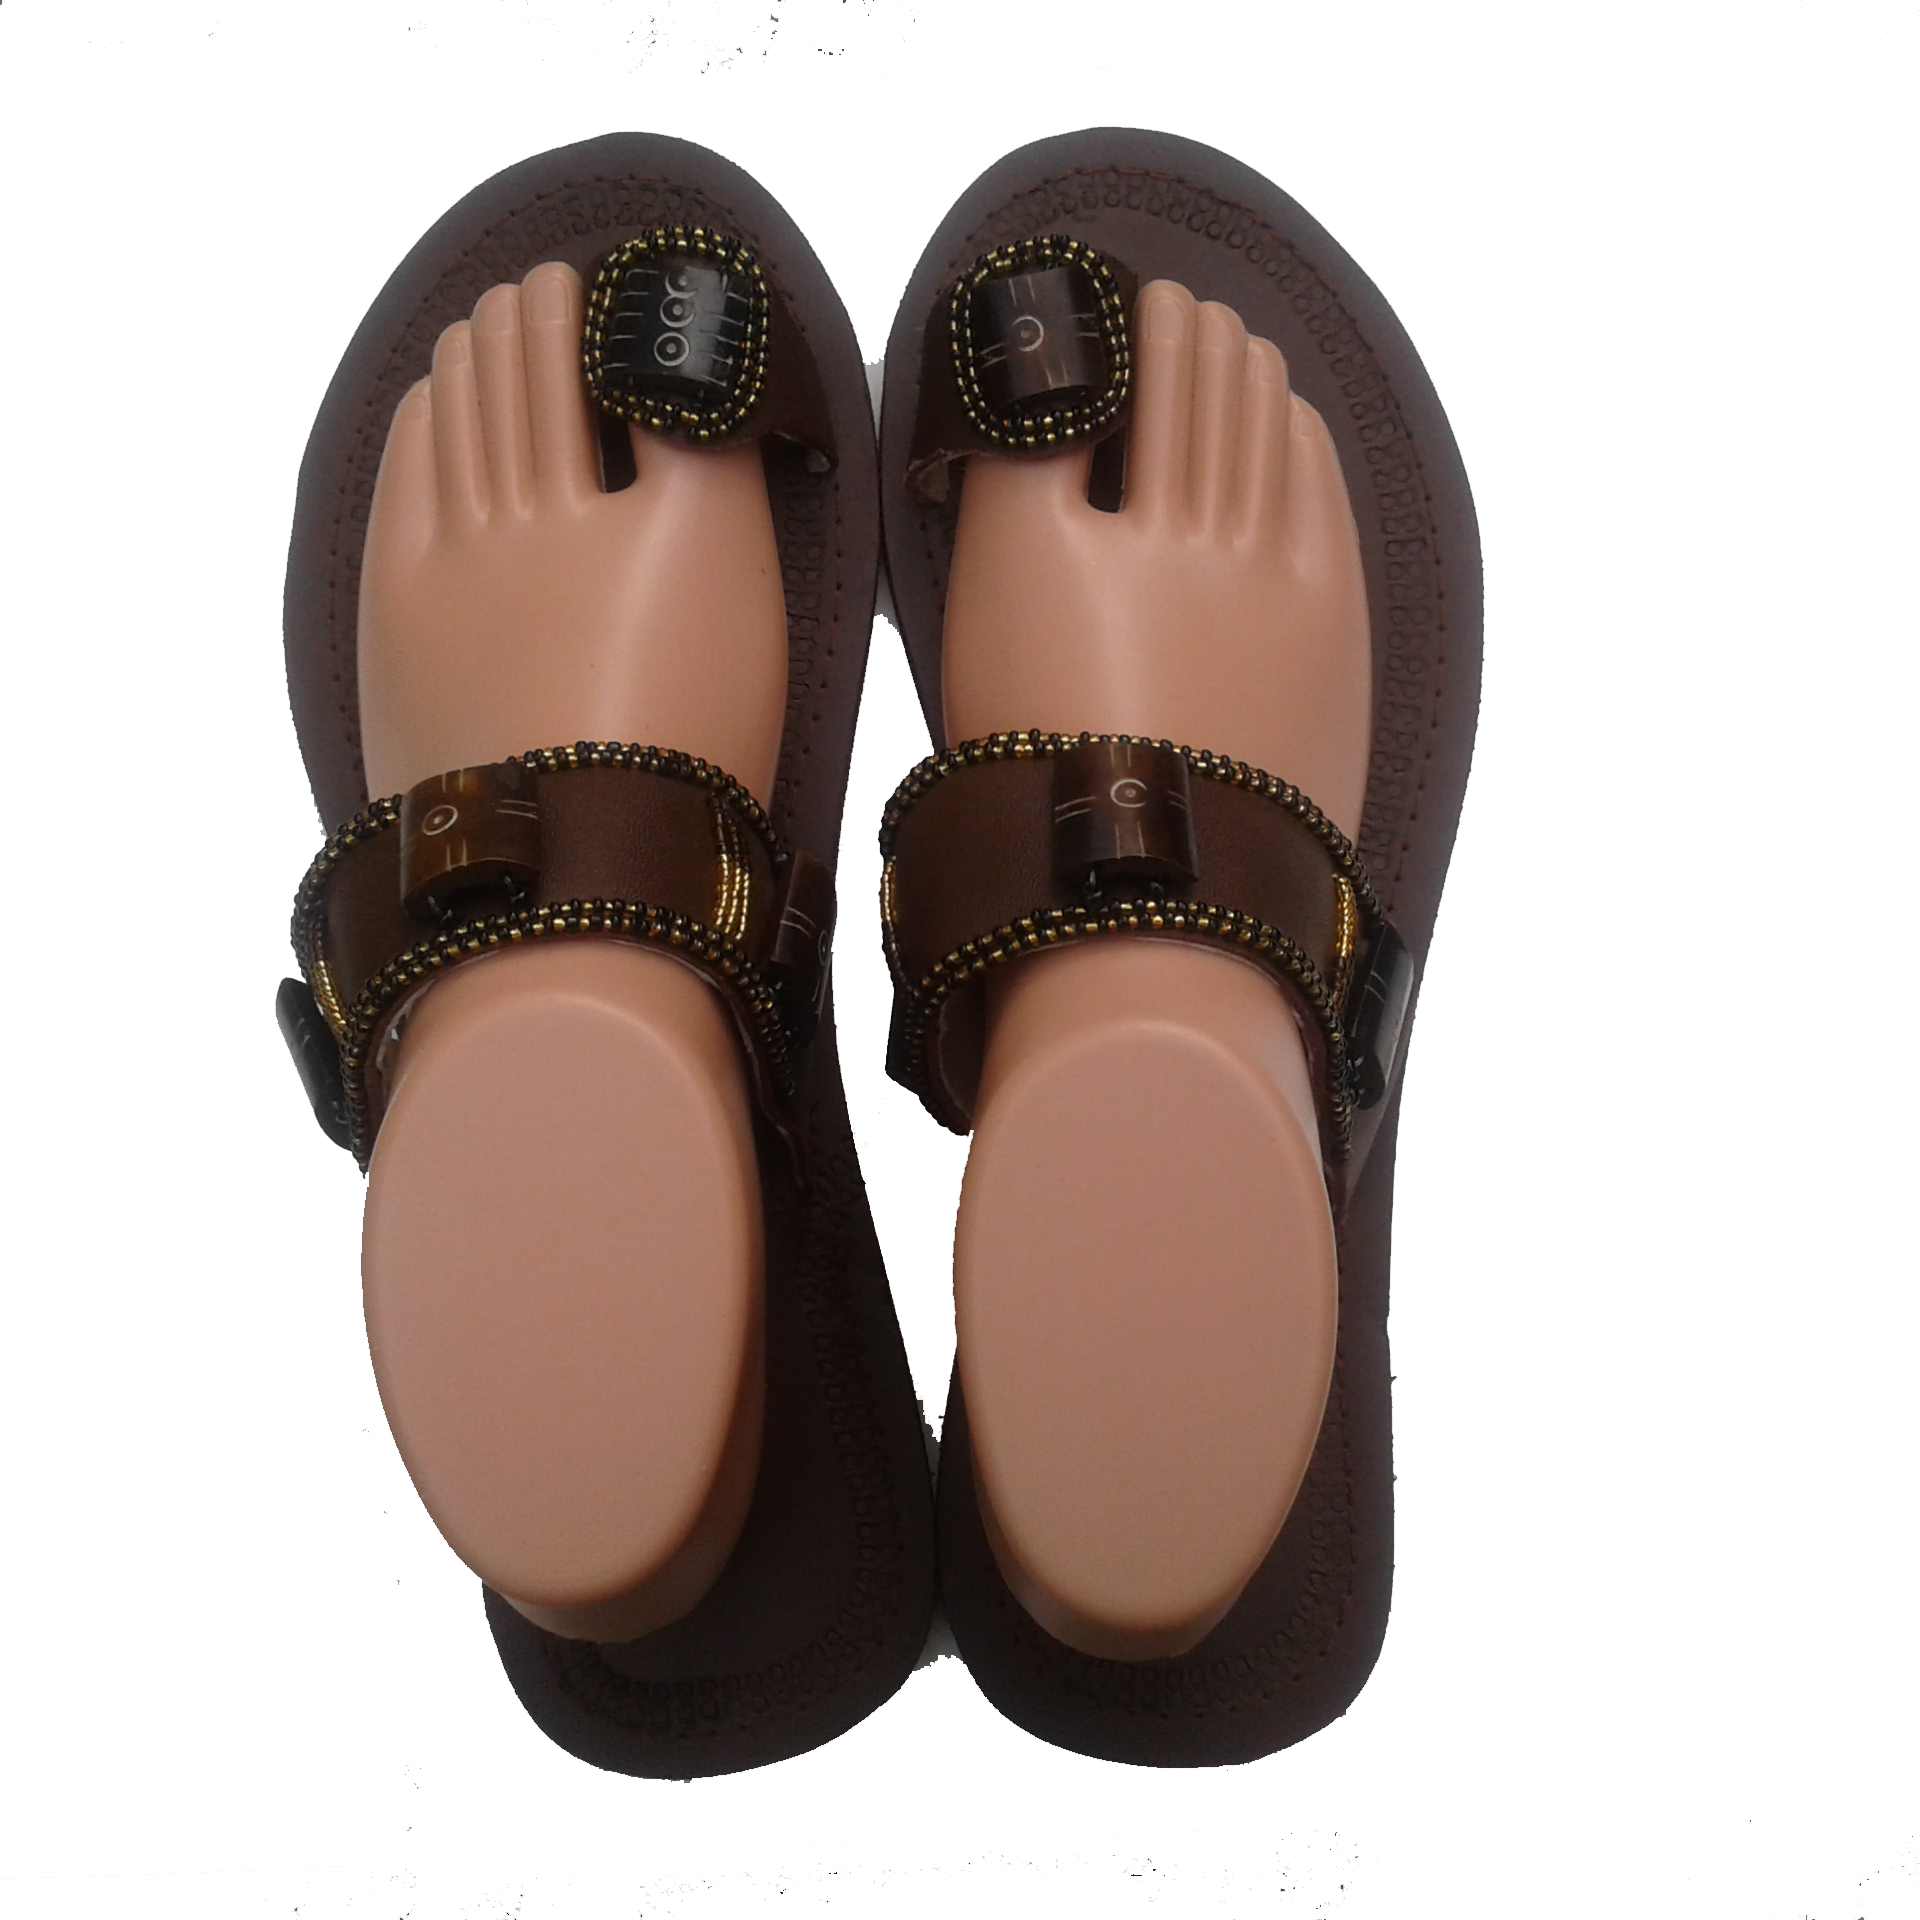 Brown women's ring sandals